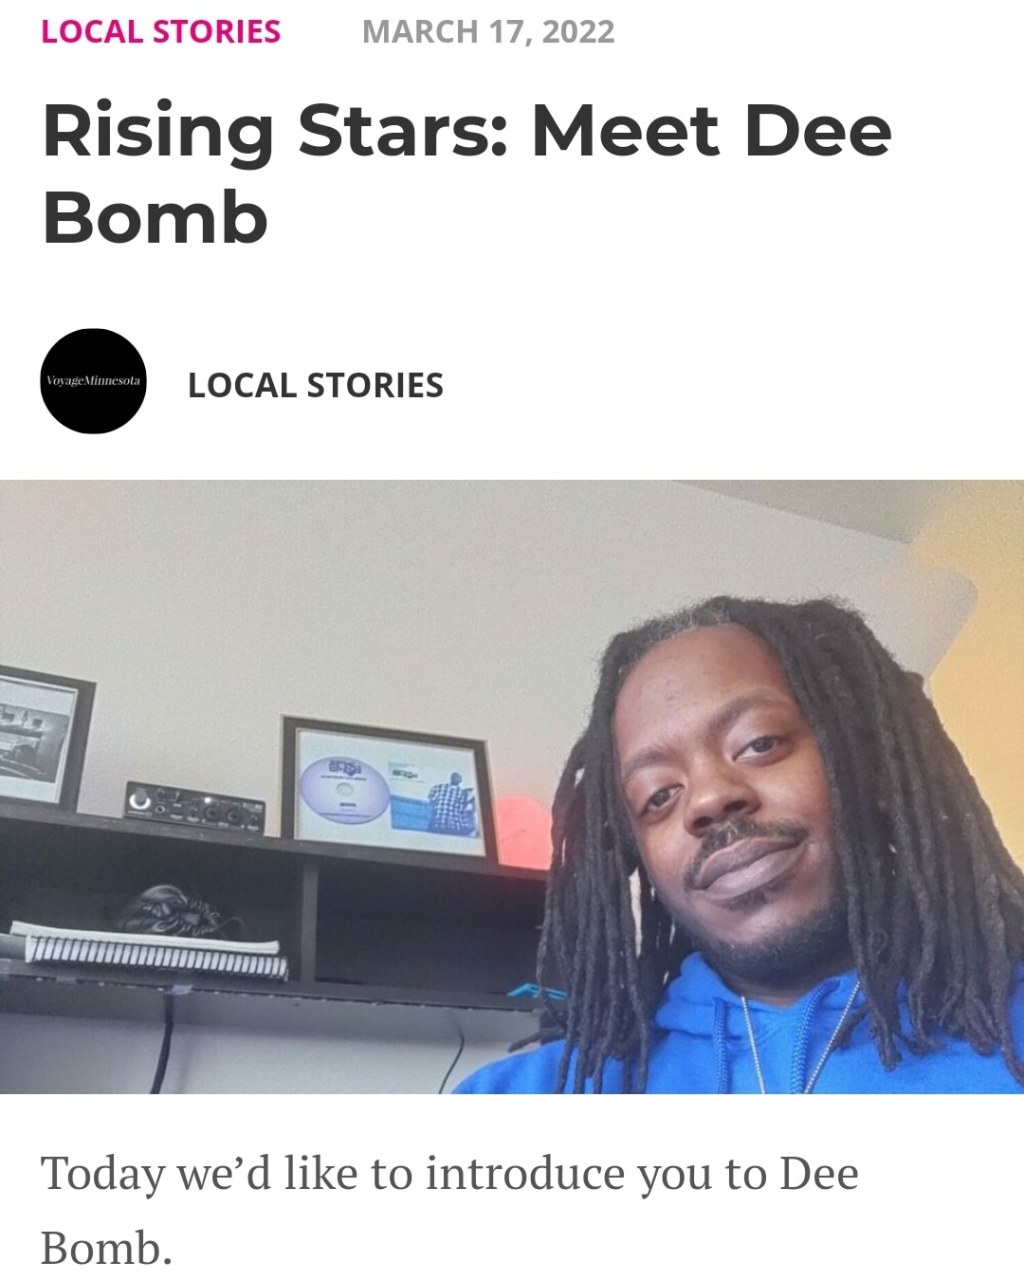 Dee Bomb featured in Voyage Minnesota Magazine